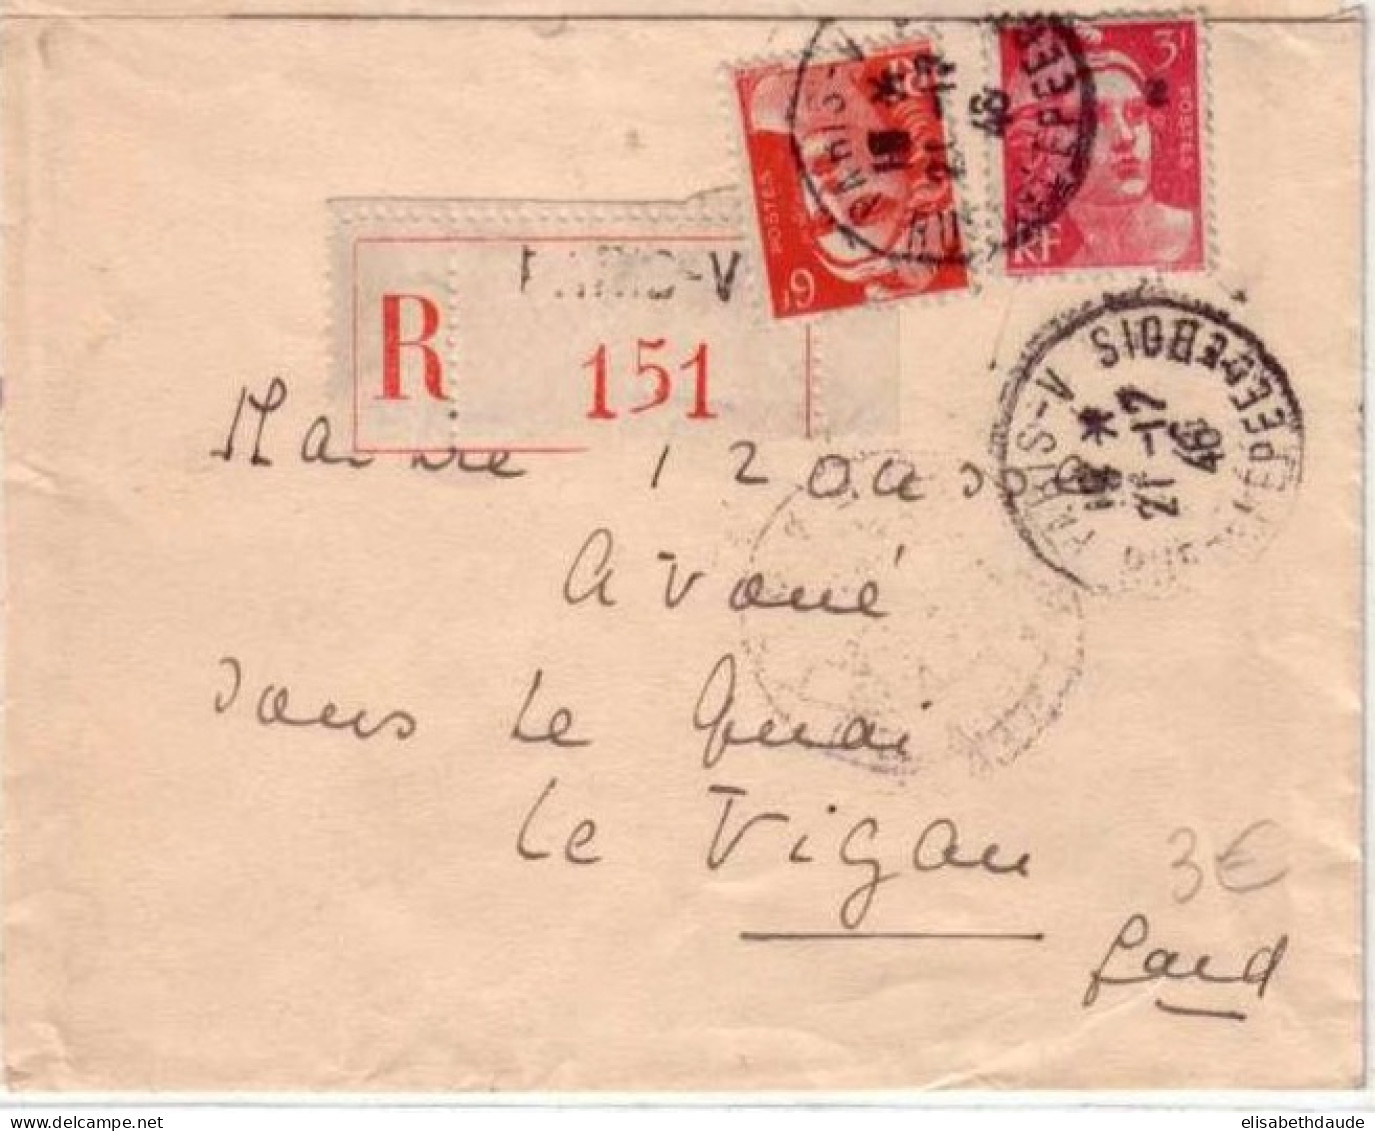 GANDON -Yvert N° 721+716 Sur LETTRE RECOMMANDEE De PARIS (V) Pour LE VIGAN (GARD) -1946 - 1945-54 Maríanne De Gandon